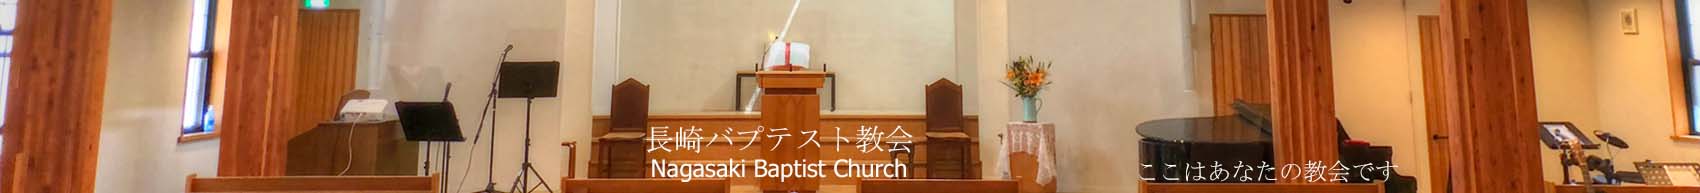 Nagasaki Baptist Church website banner image